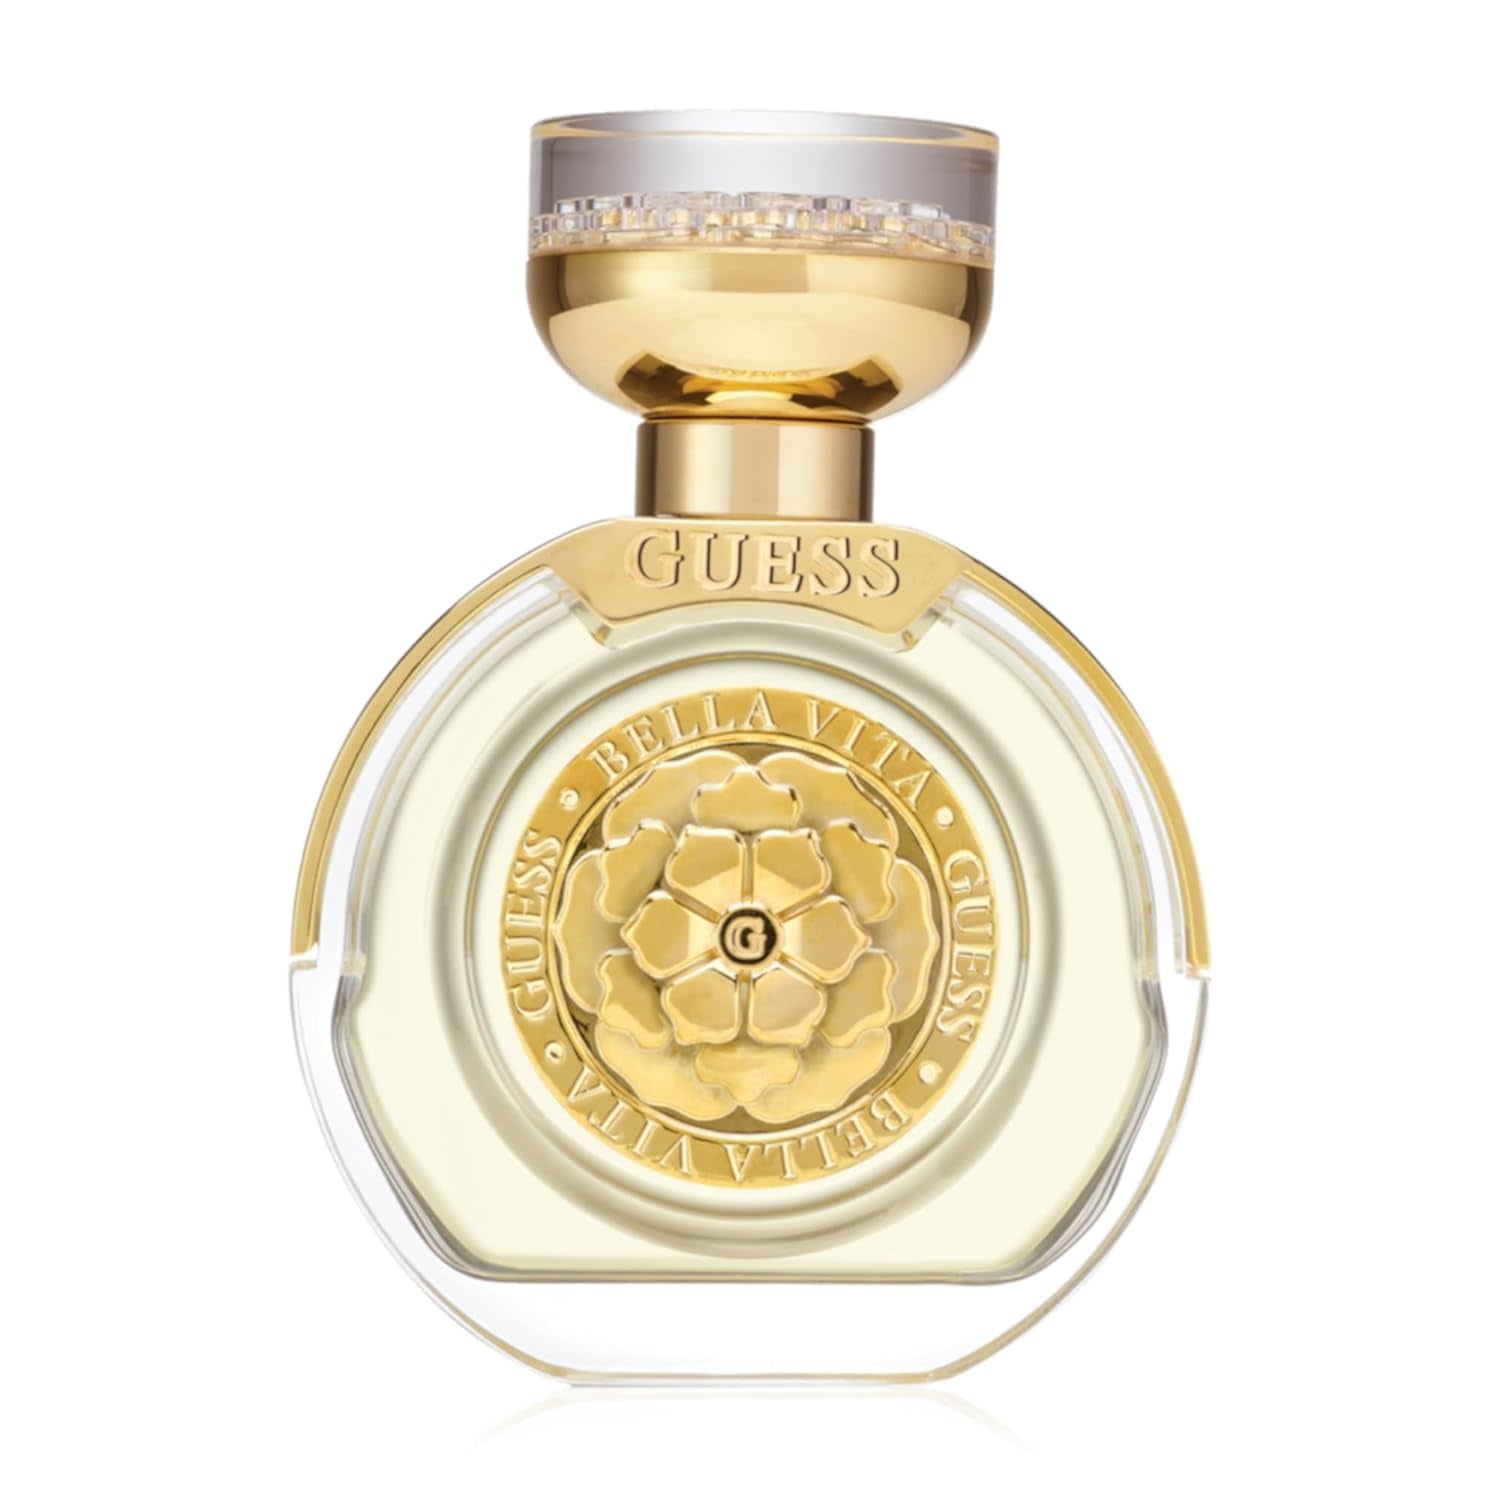 GUESS Bella Vita Eau de Parfum Perfume Spray For Women, 1.7 Fl. Oz.